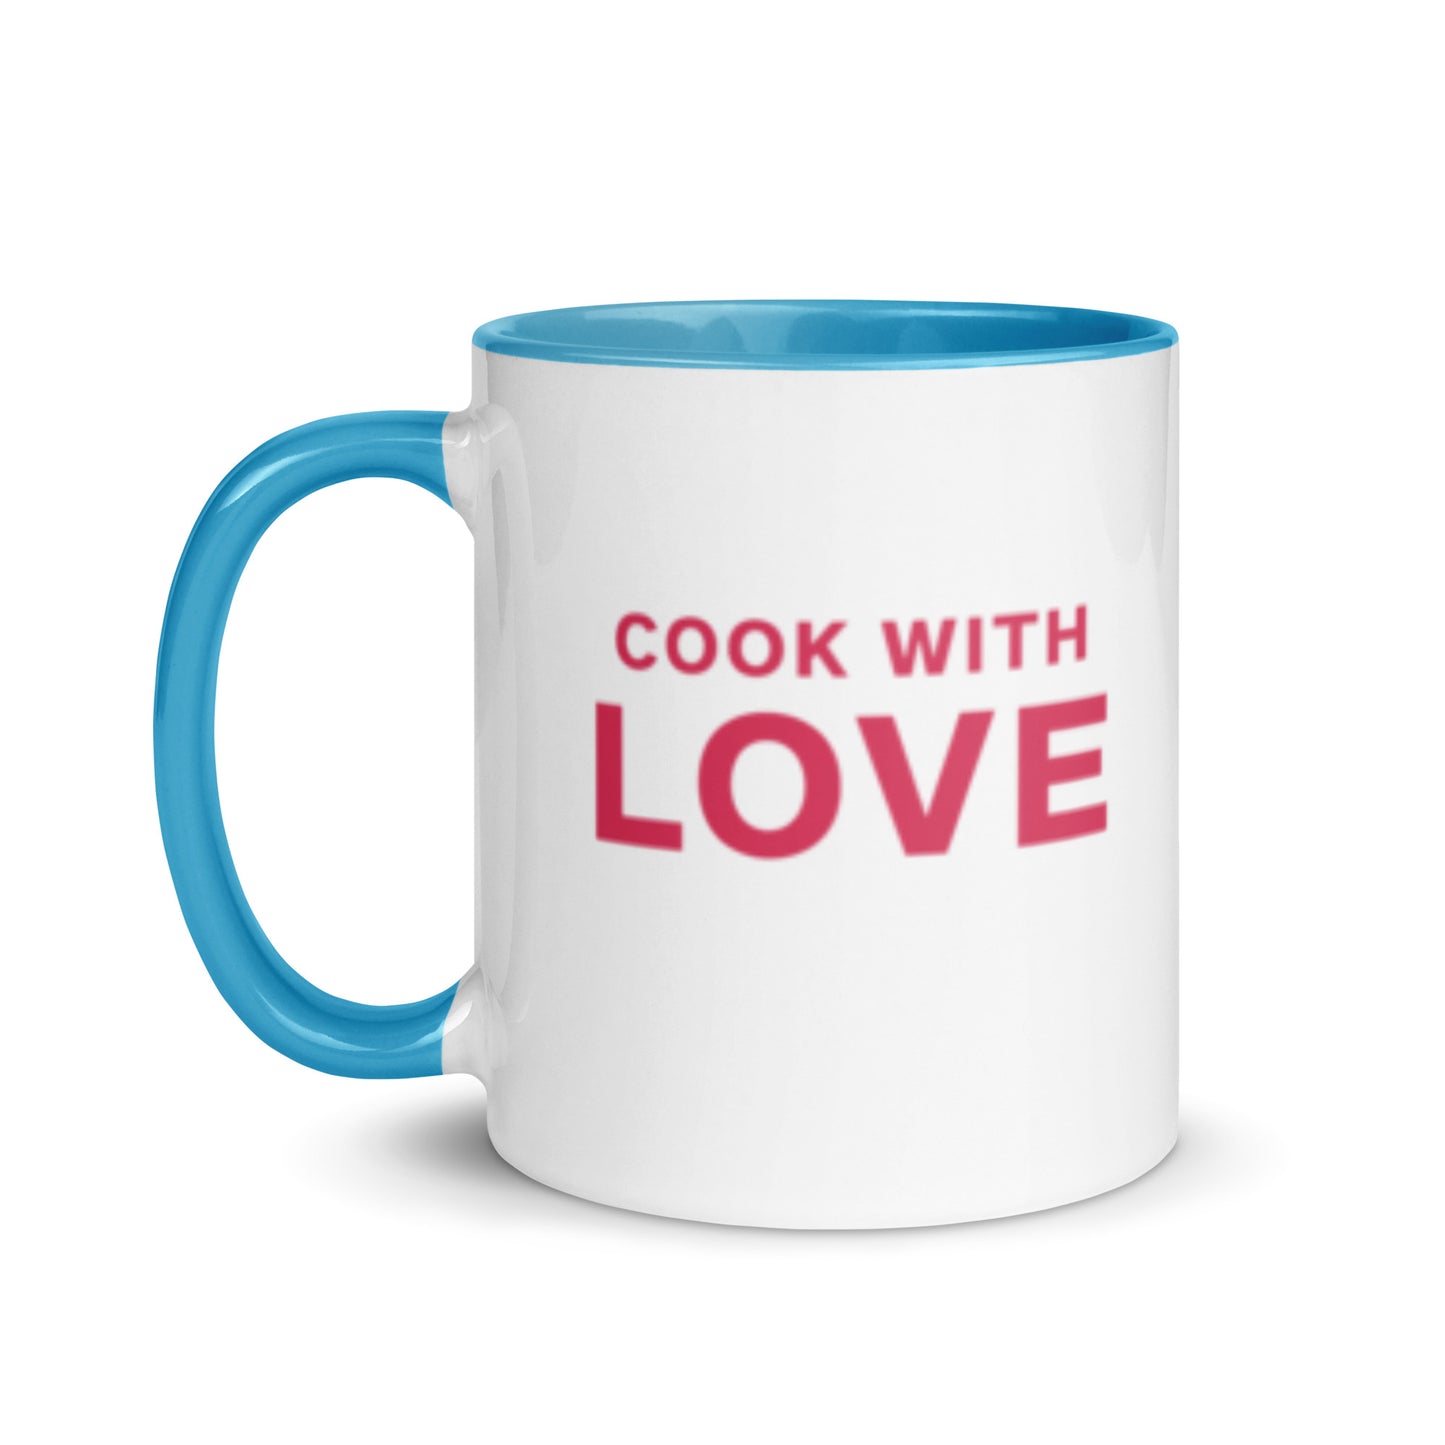 "Cook with Love" Mug